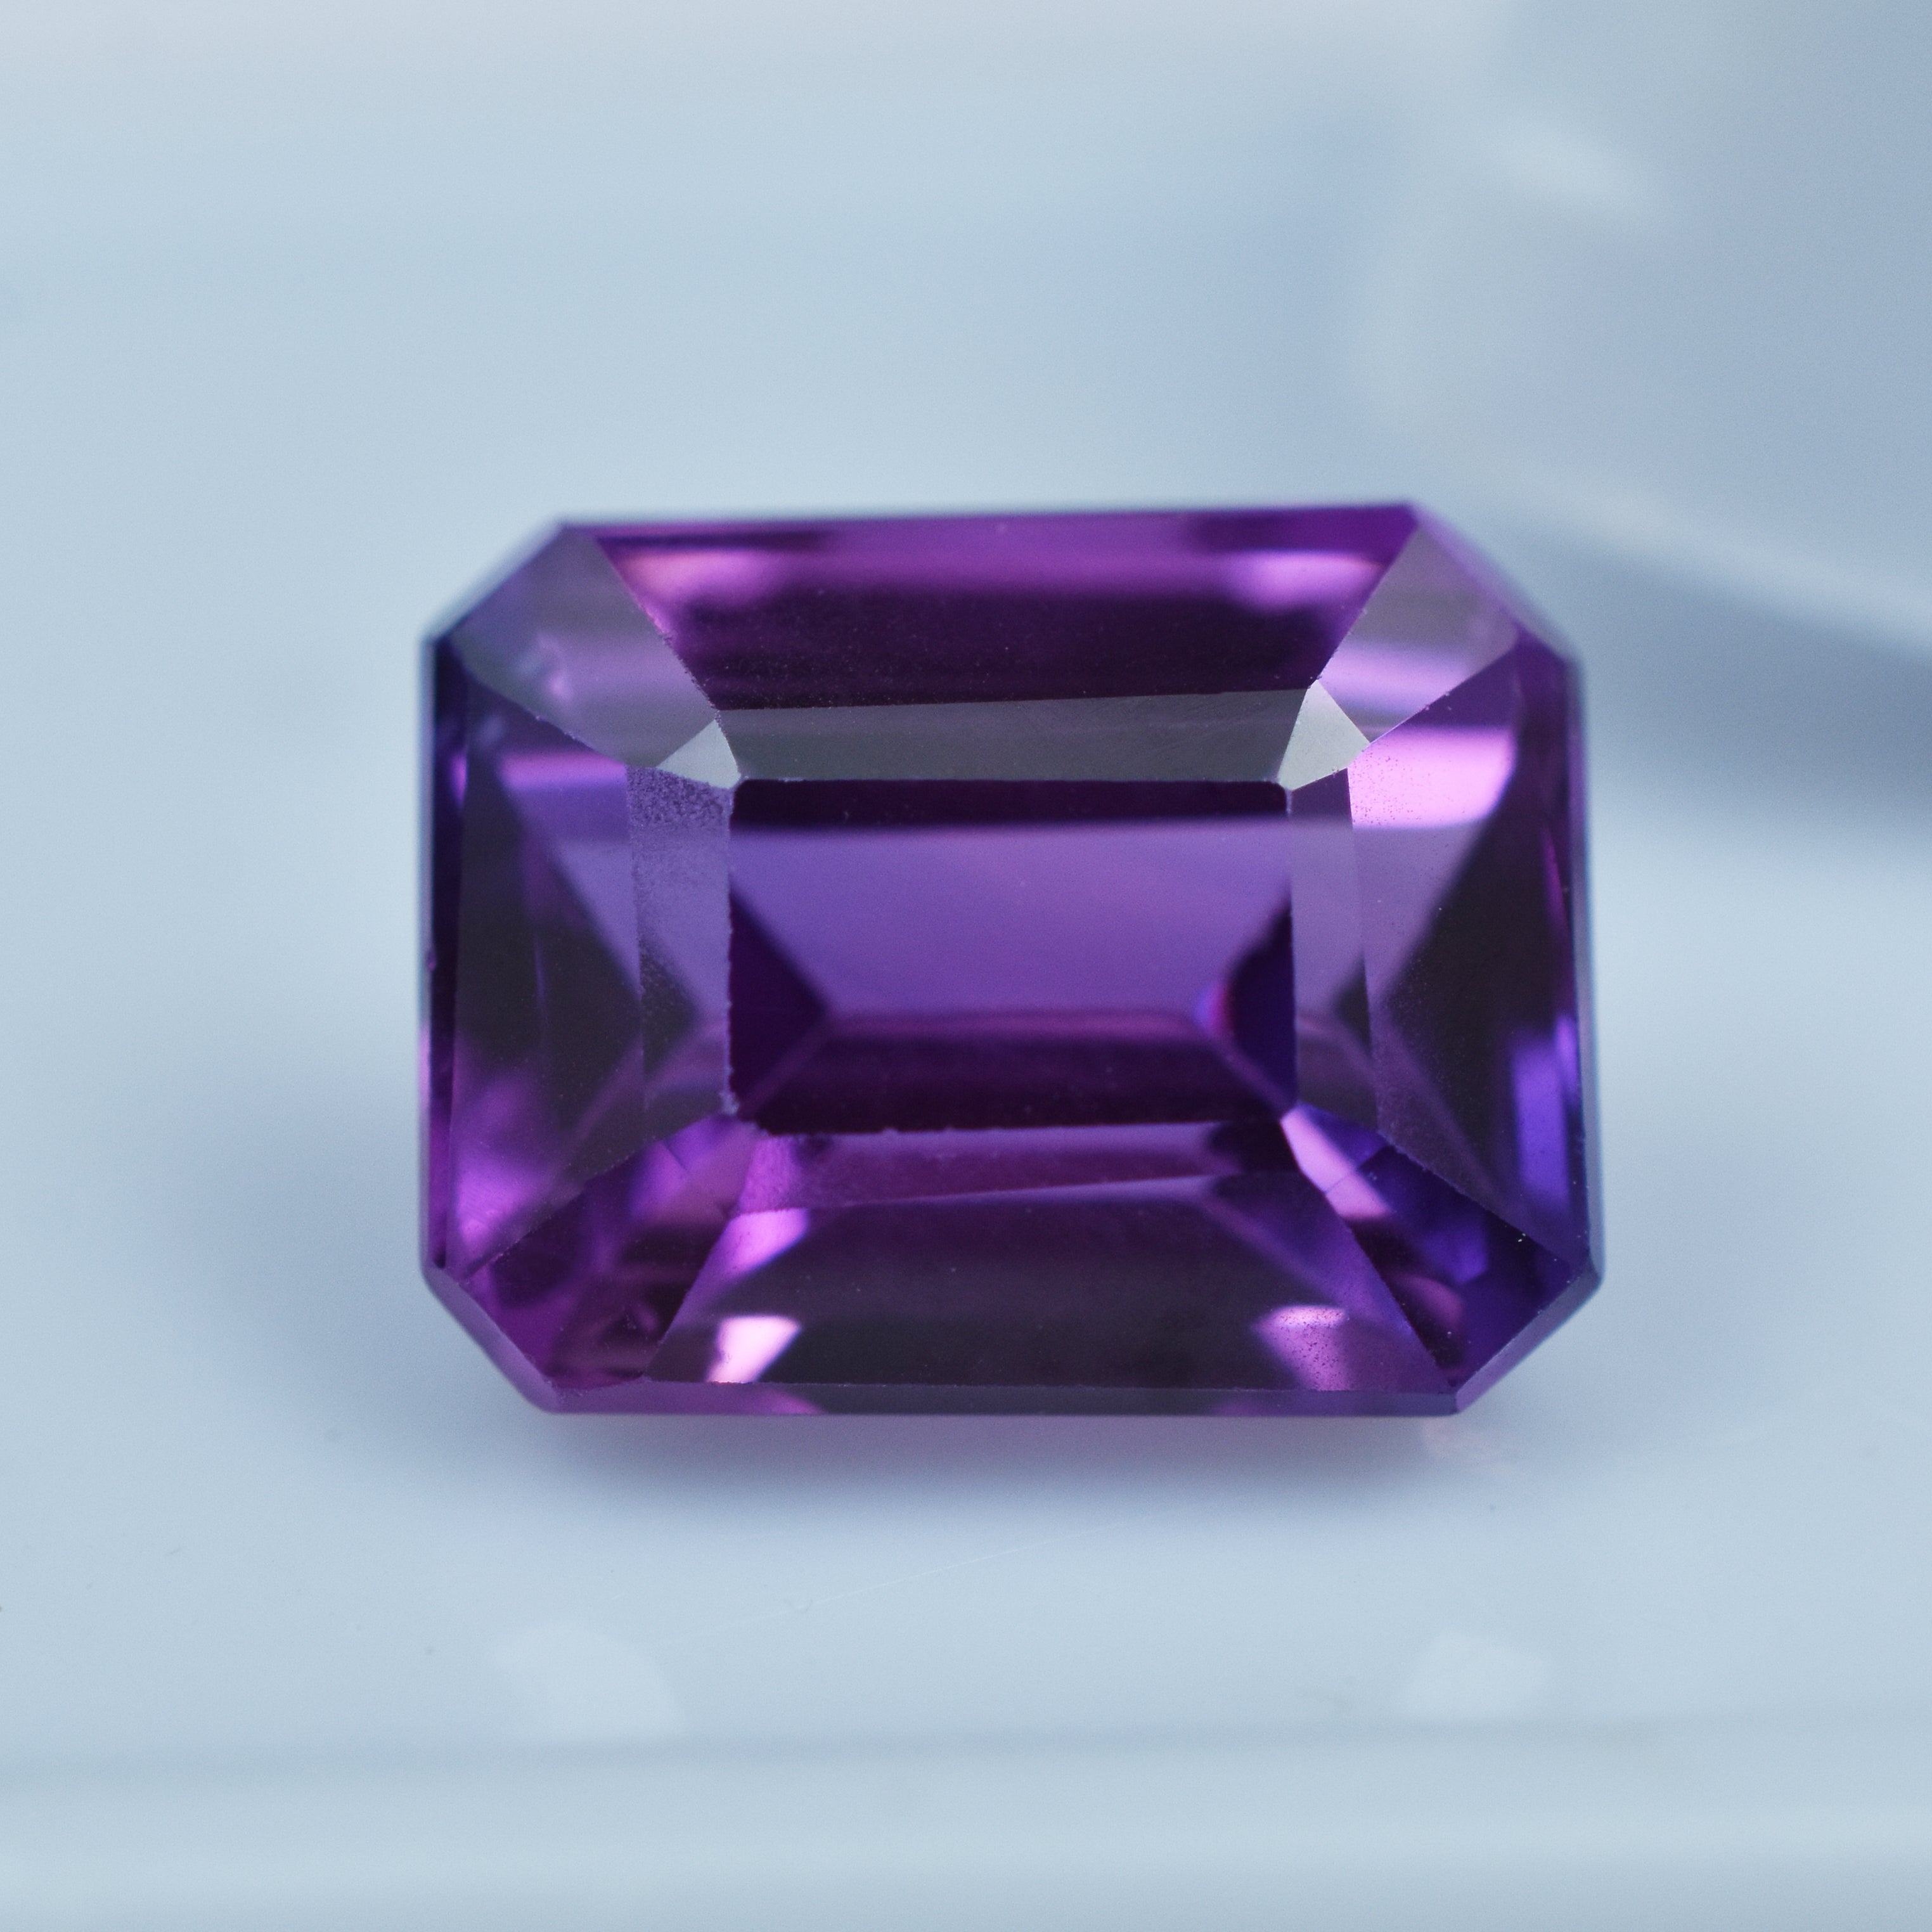 Beautiful Tanzanite Gem 4.90 Carat Emerald Cut Certified Purple Tanzanite Natural Loose Gemstone December Birthstone Gem Most Adorable Purple Gem